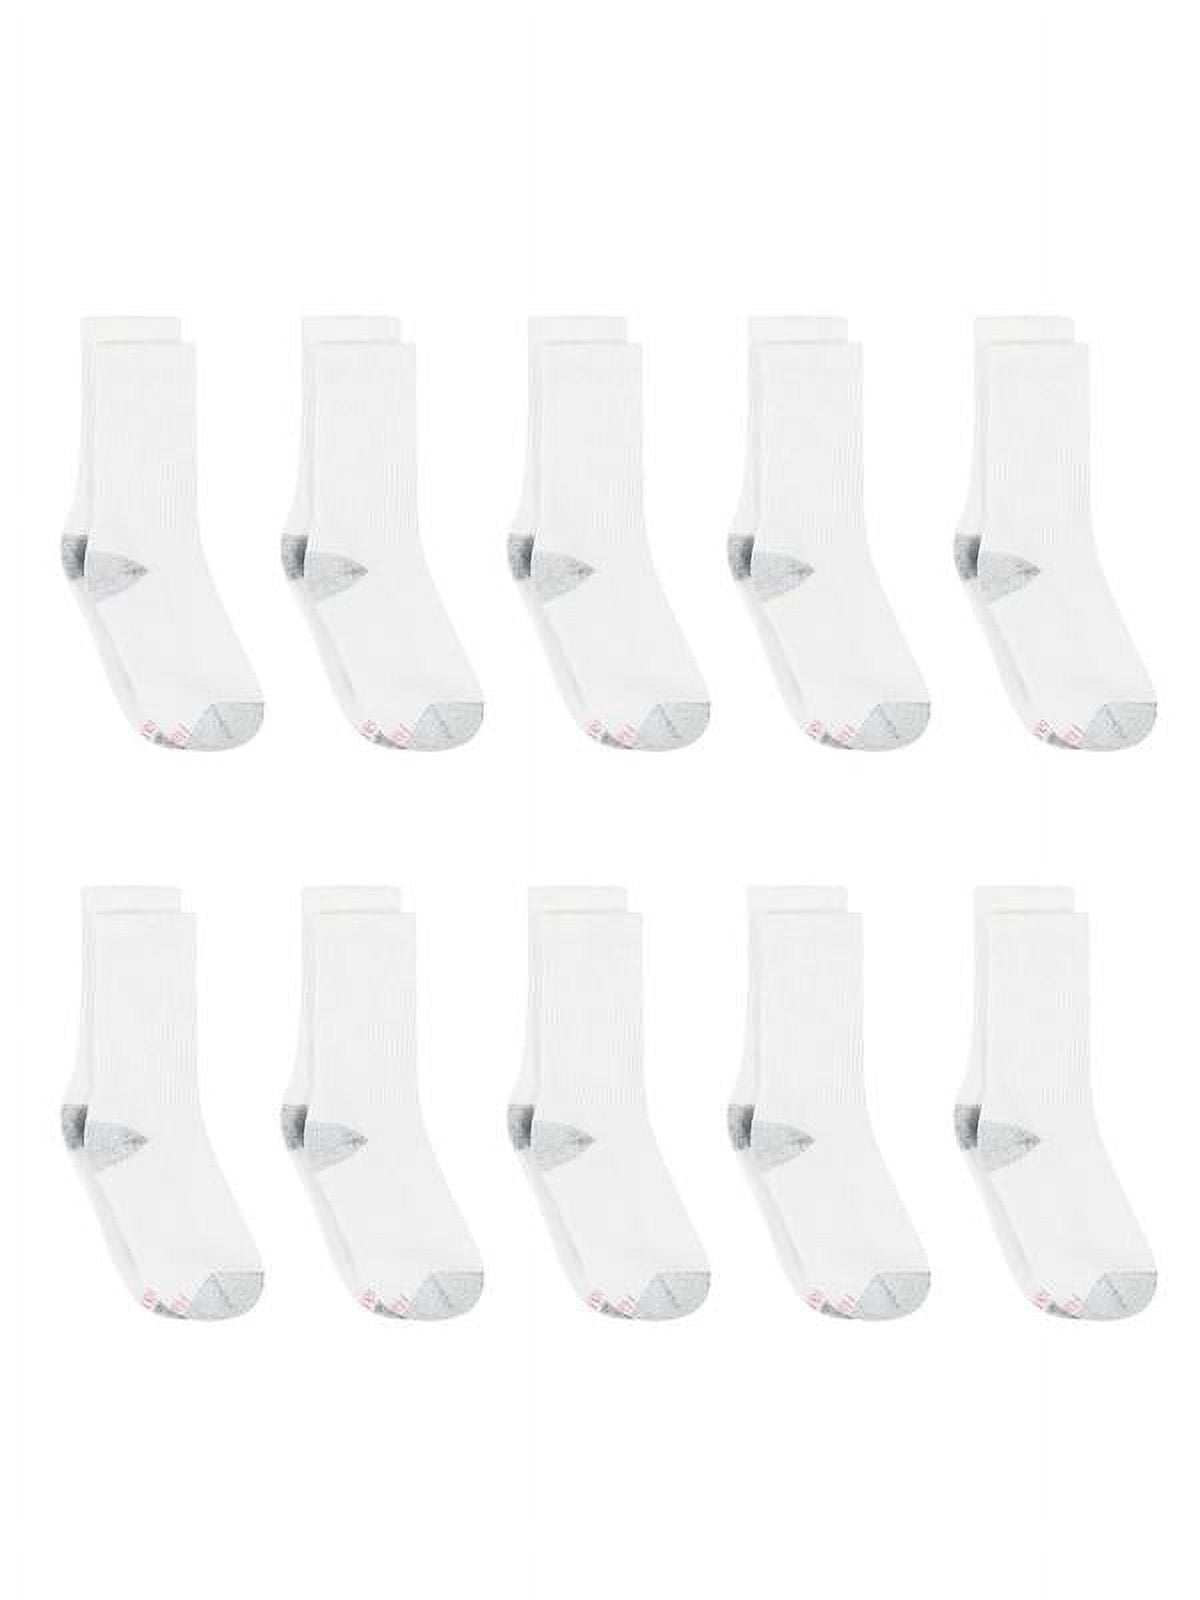 Hanes Women's Cool Comfort Crew Socks, 10-Pair Value Pack - Walmart.com